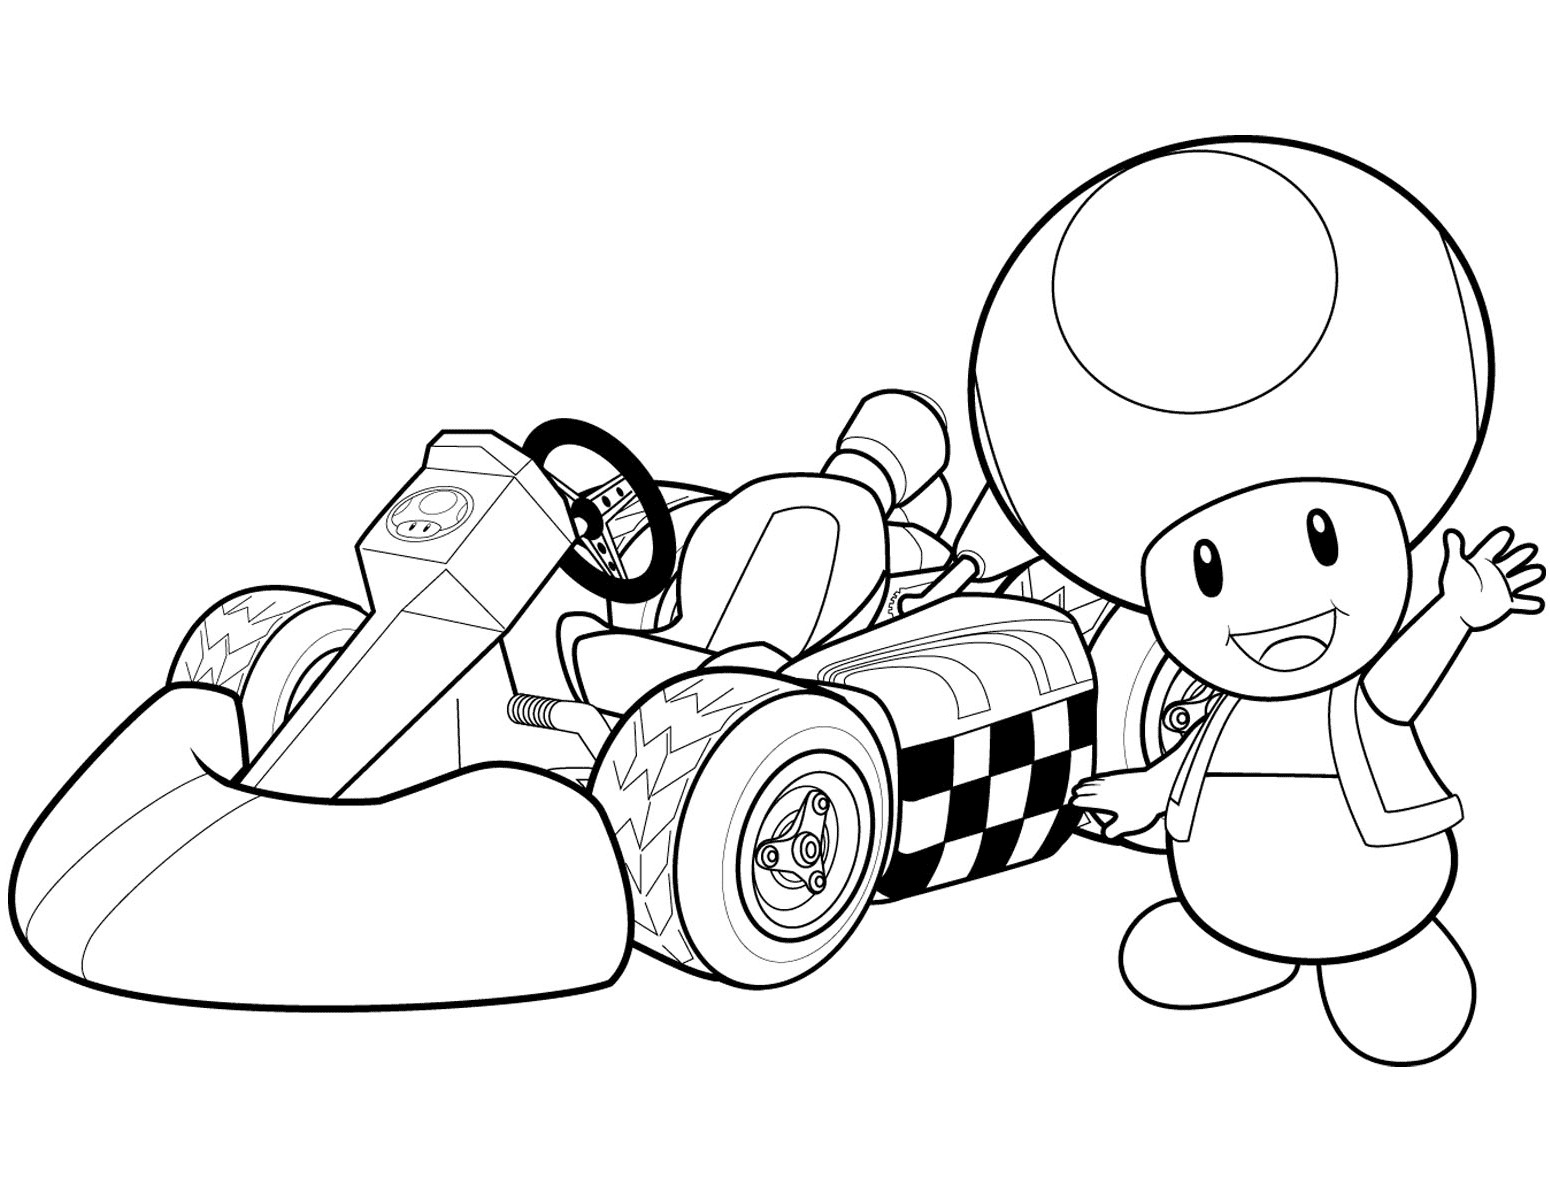 《Toad Mario》中的《马里奥赛车 Wii》中的蟾蜍和他的赛车